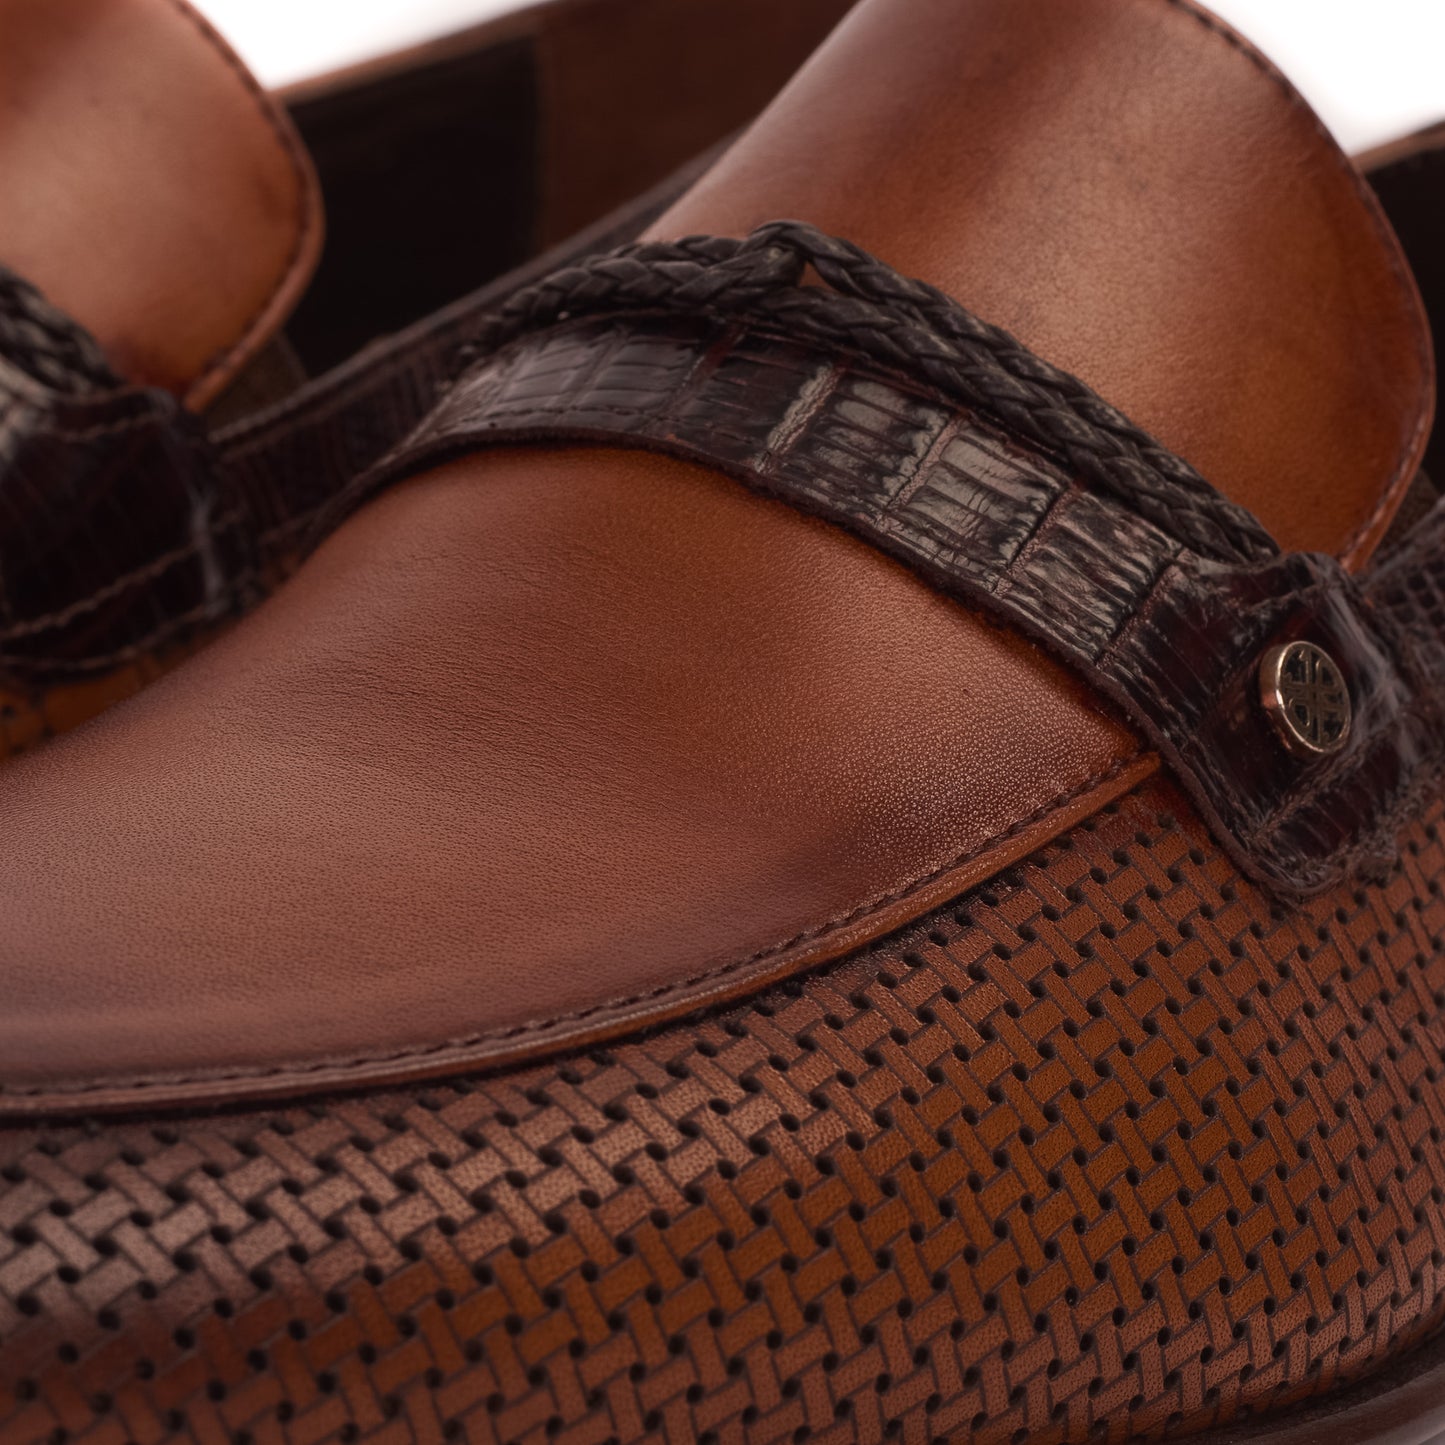 The Acerra Tan Leather Loafer Men Shoe